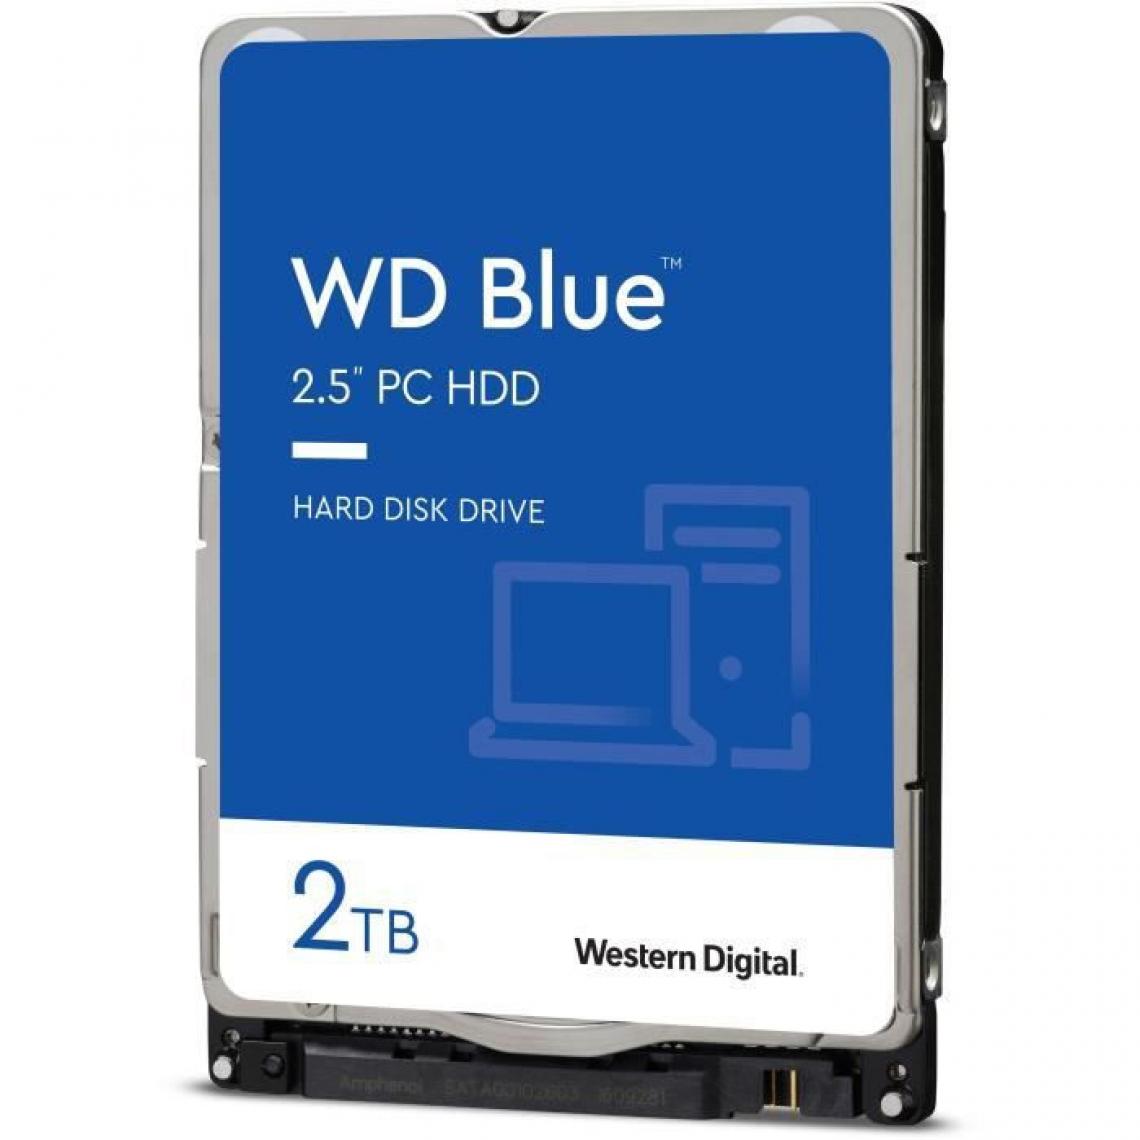 Western Digital - WD Blue™ - Disque dur Interne - 2To - 5400 tr/min - 2.5 (WD20SPZX) - Disque Dur interne